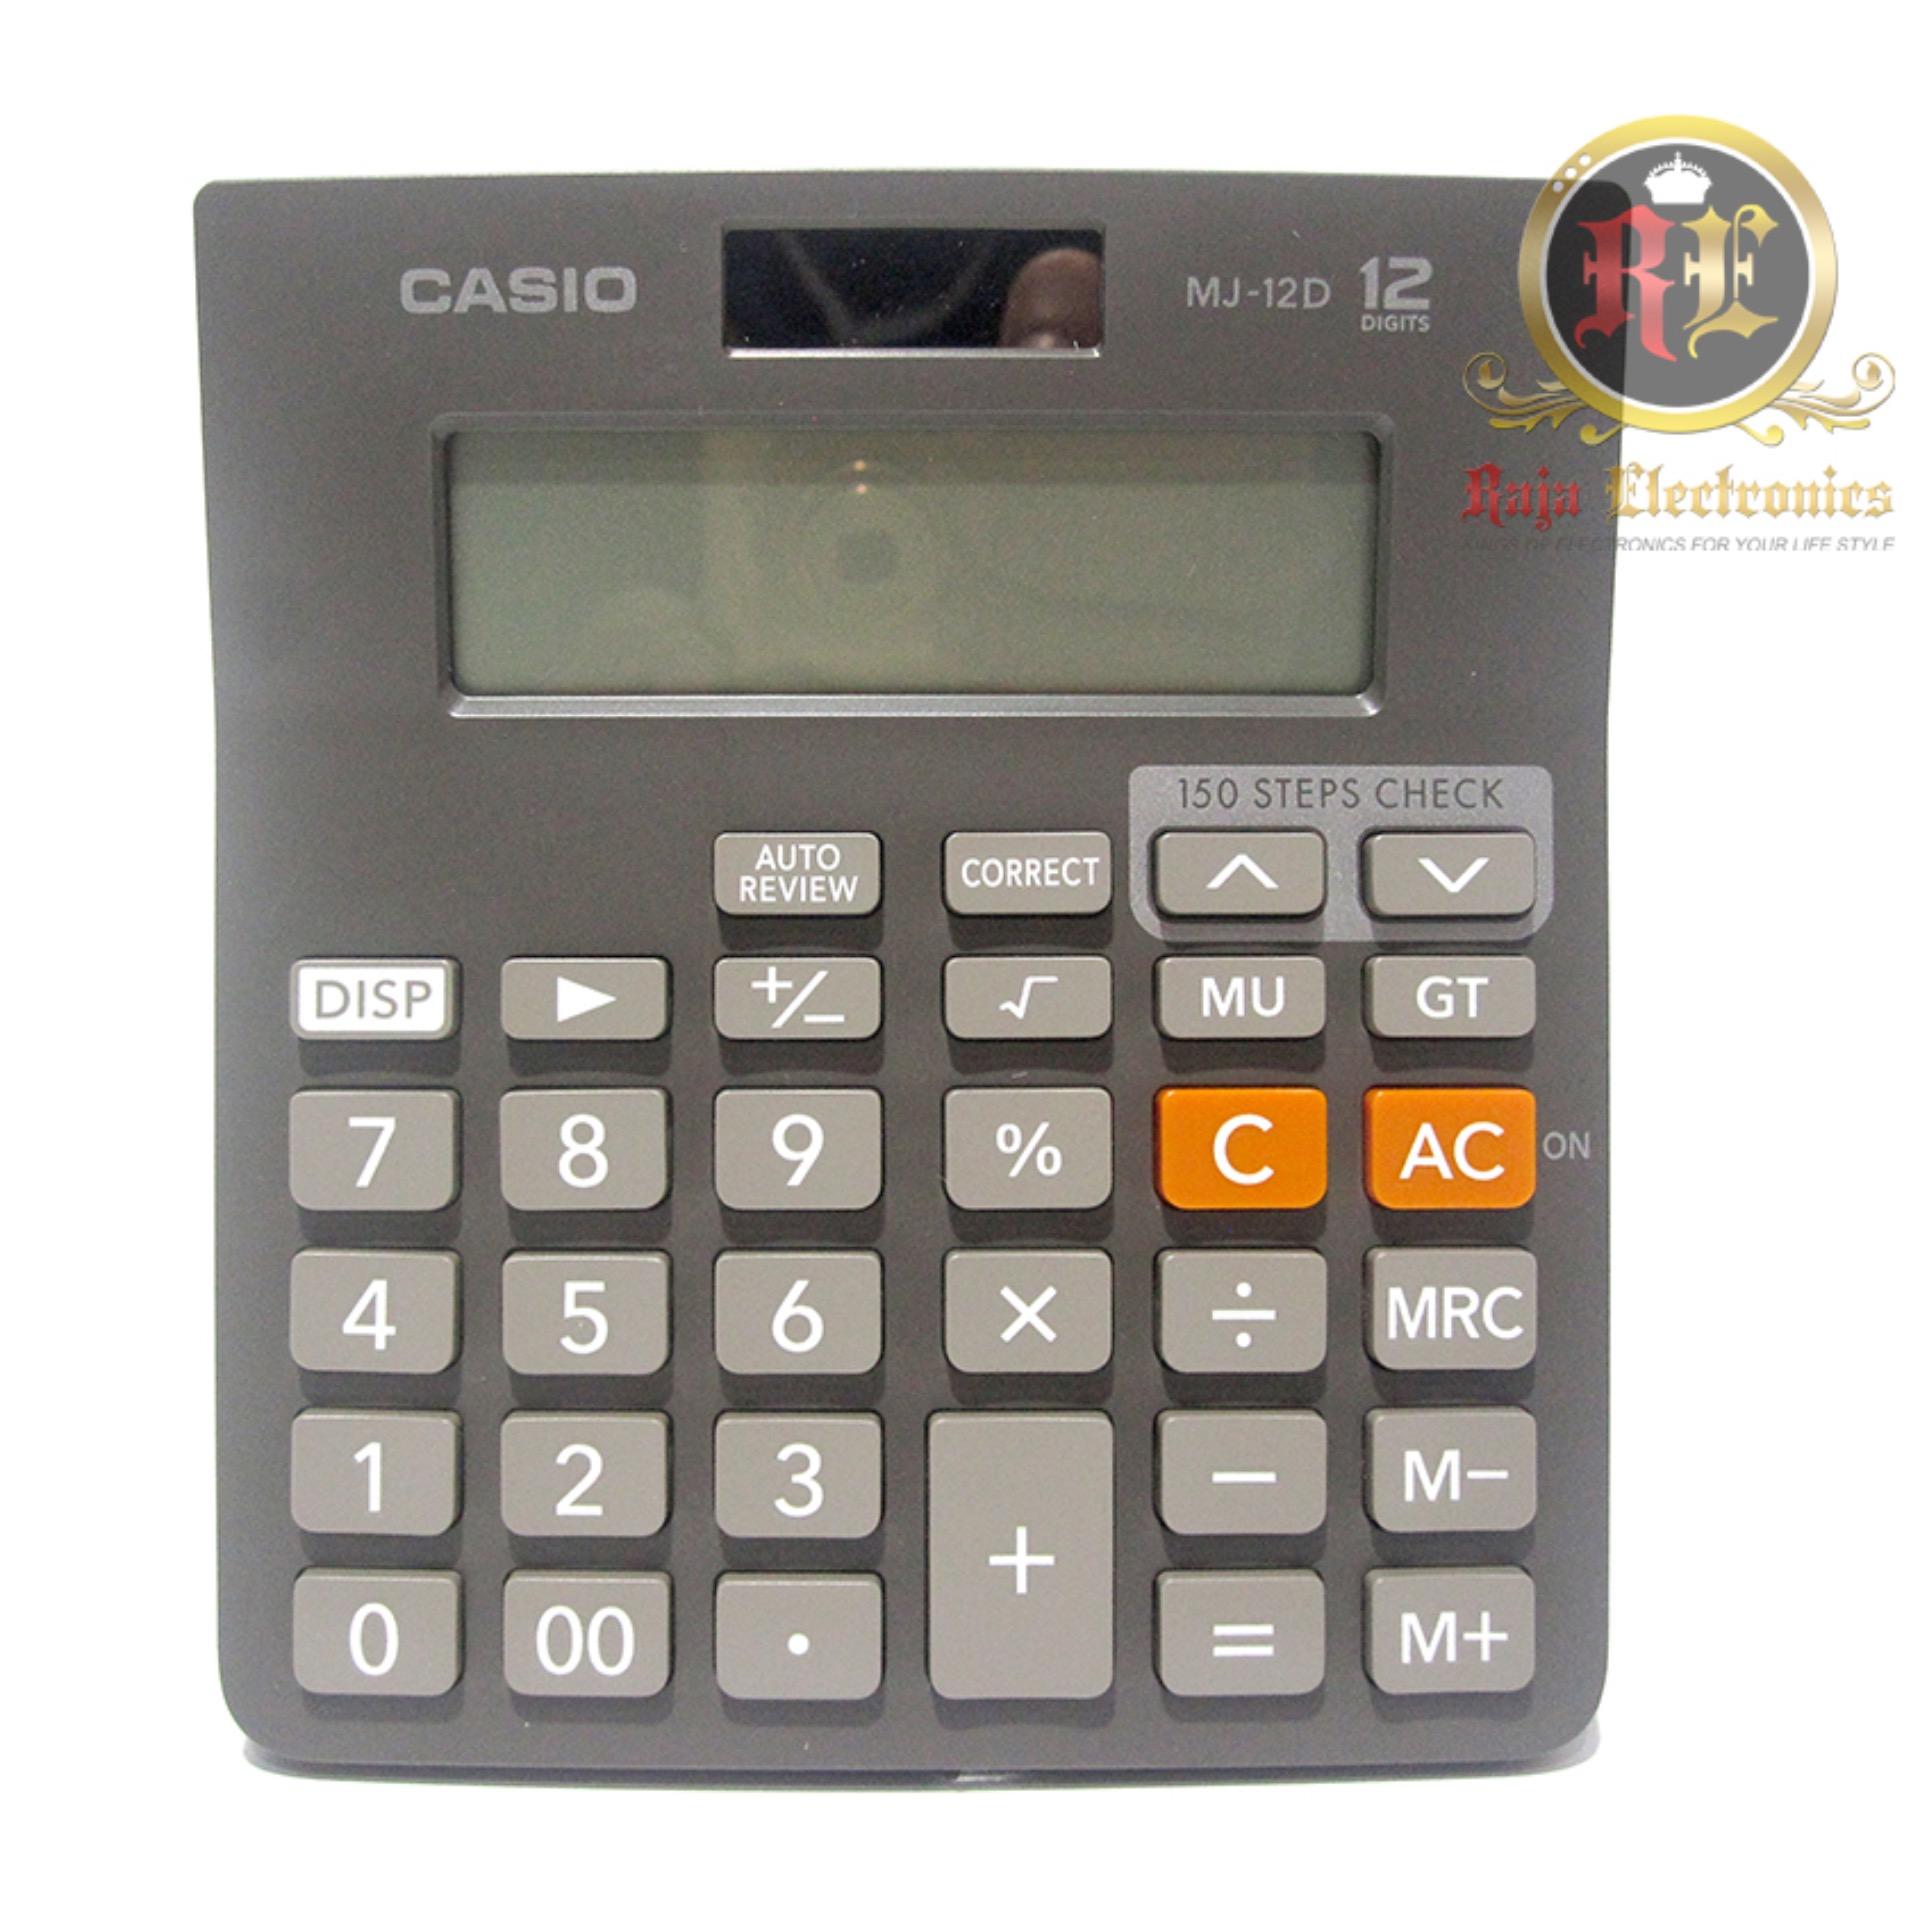 Casio Kalkulator MJ-12D Original (Garansi 1 Tahun Casio)